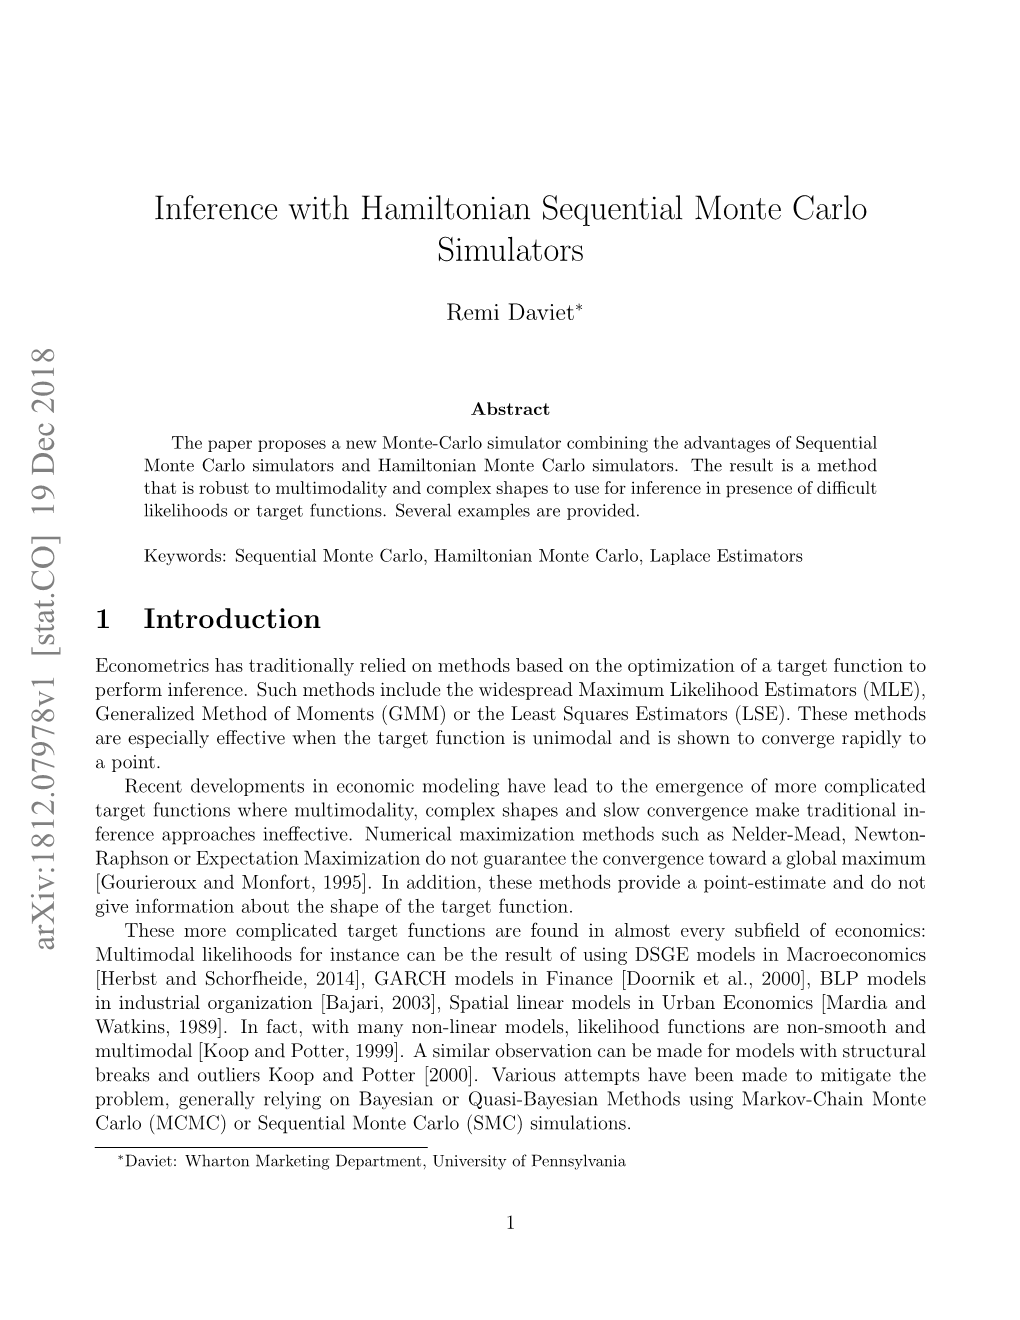 Inference with Hamiltonian Sequential Monte Carlo Simulators Arxiv